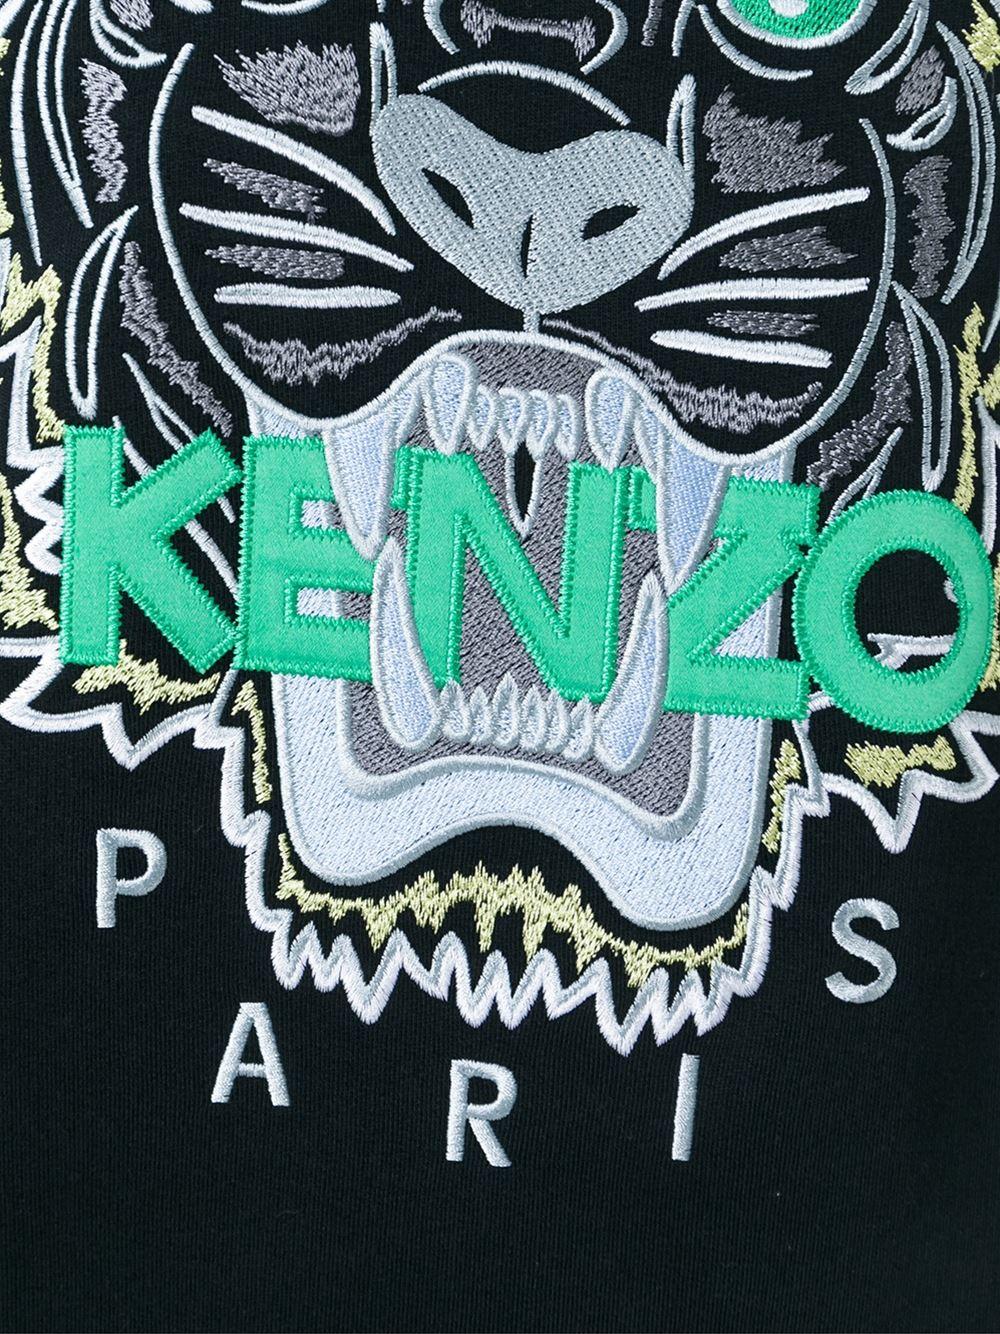 KENZO Cotton 'tiger' Sweatshirt in Black (Green) for Men - Lyst